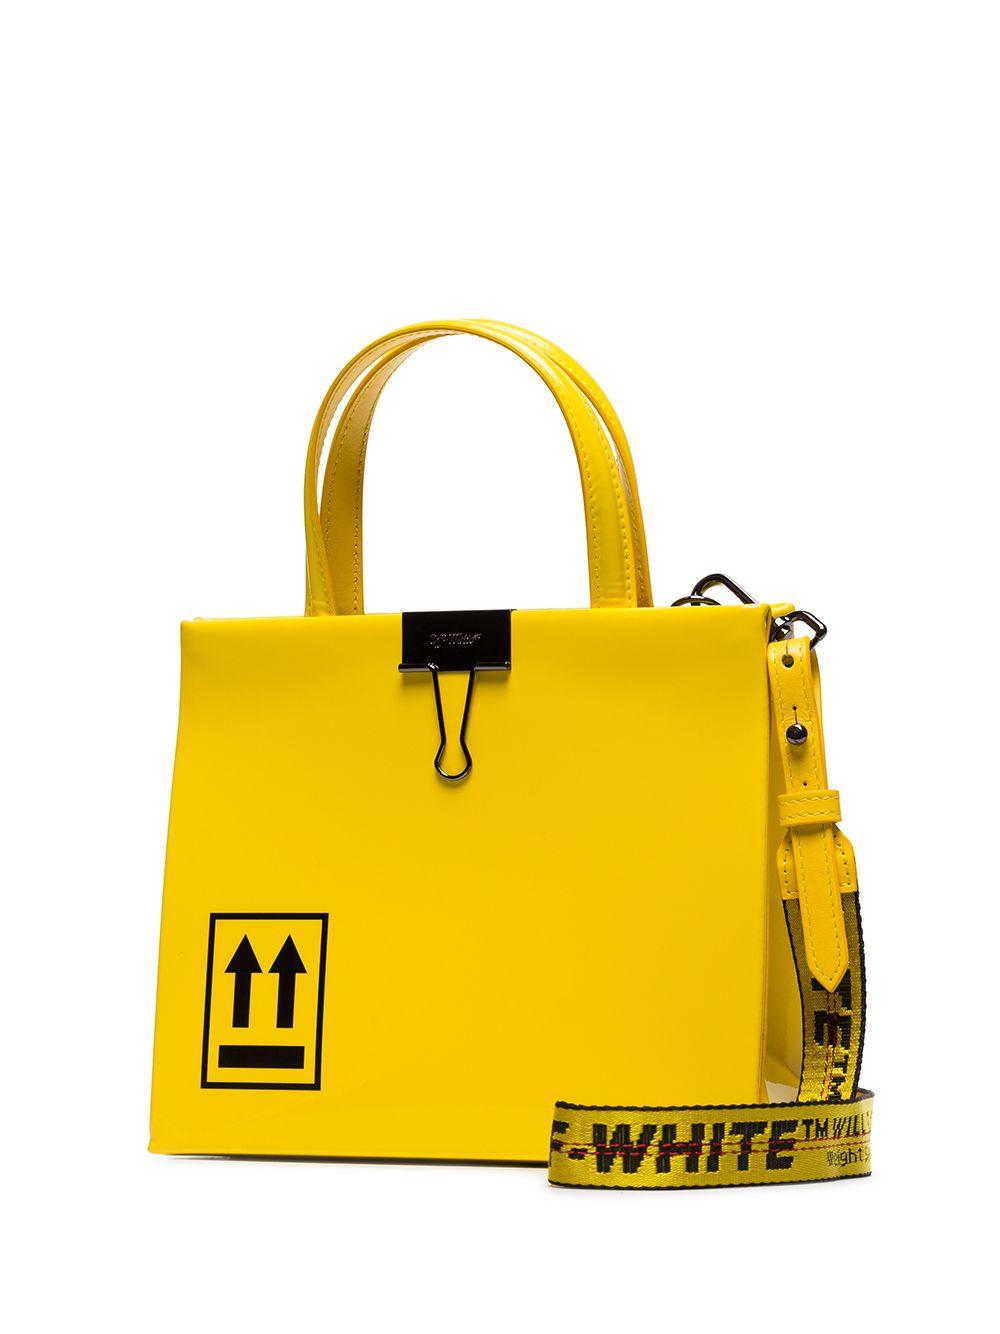 Off-White c/o Virgil Abloh Yellow Mini Patent Leather Tote Bag